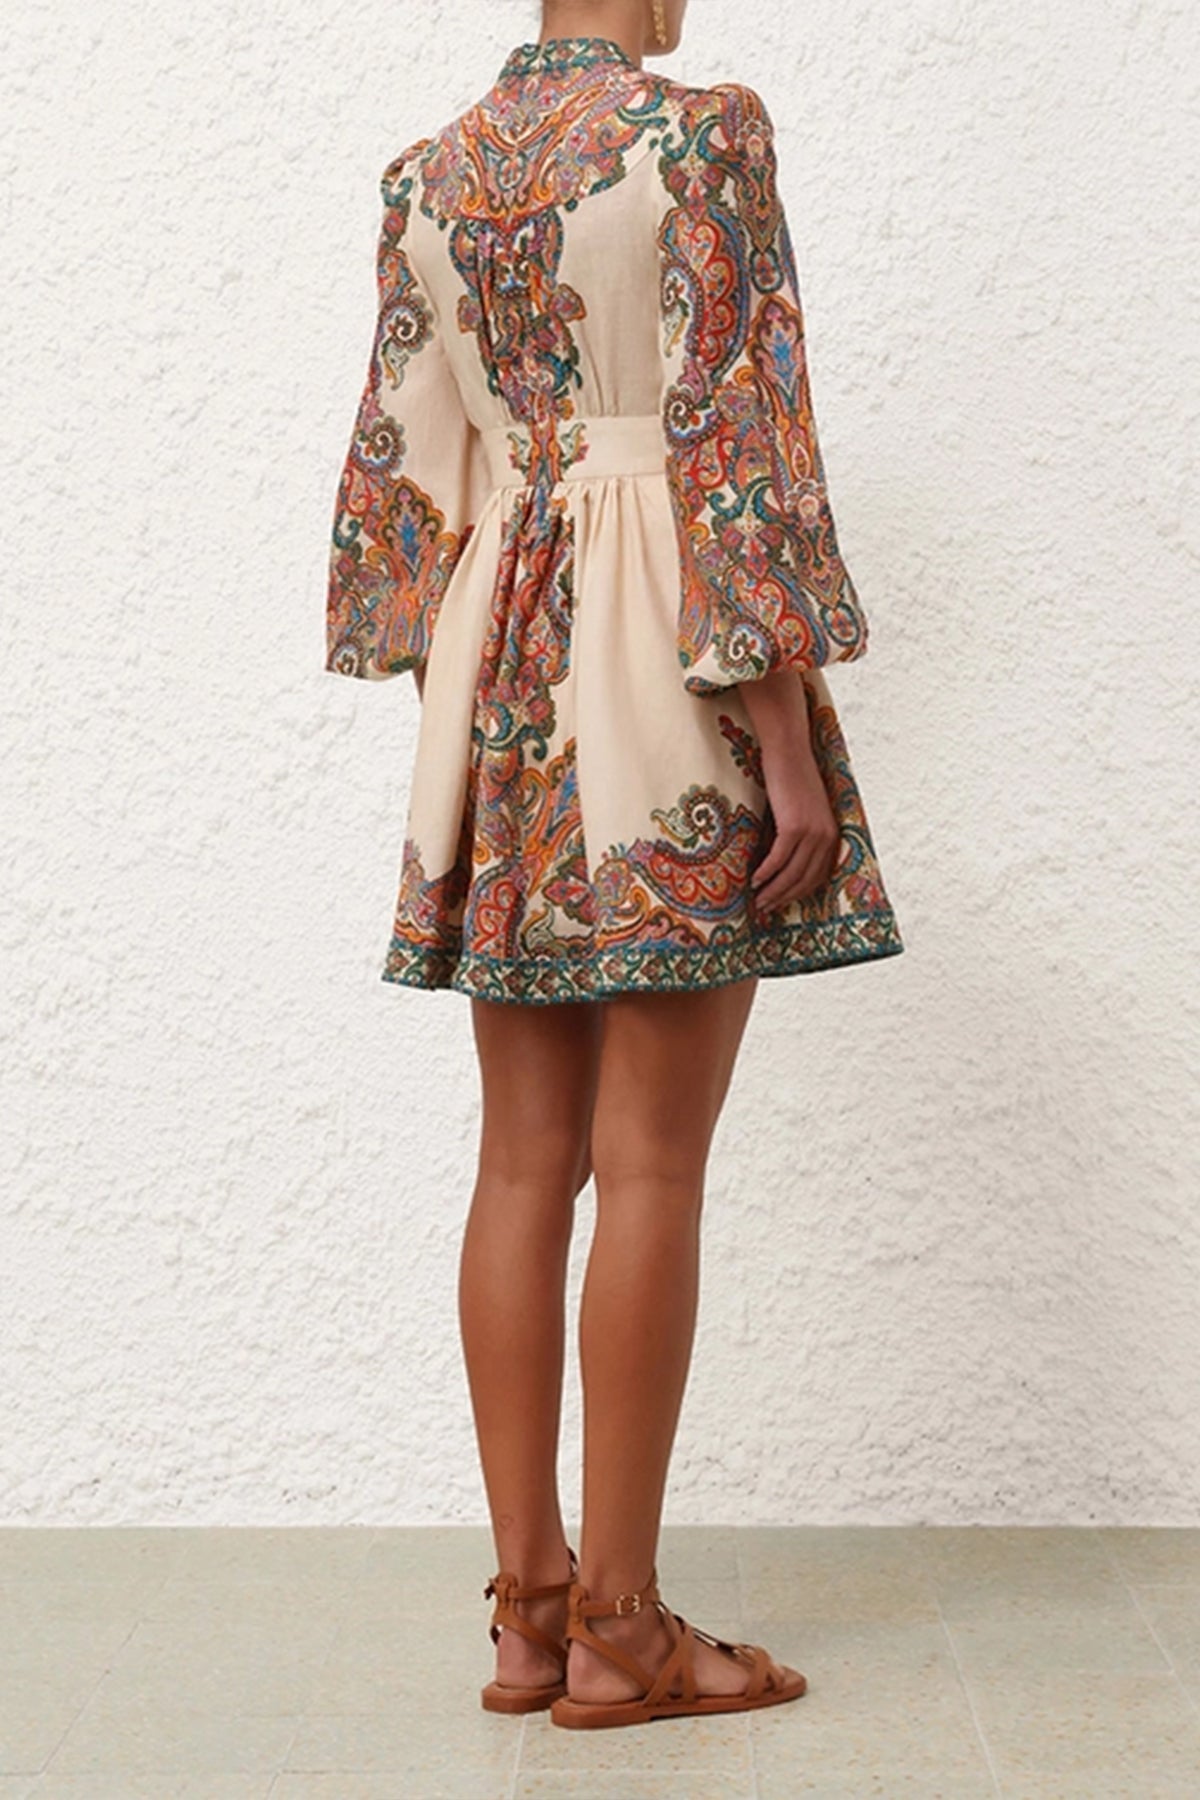 Ottie Plunge Mini Dress in Multi Paisley - shop-olivia.com